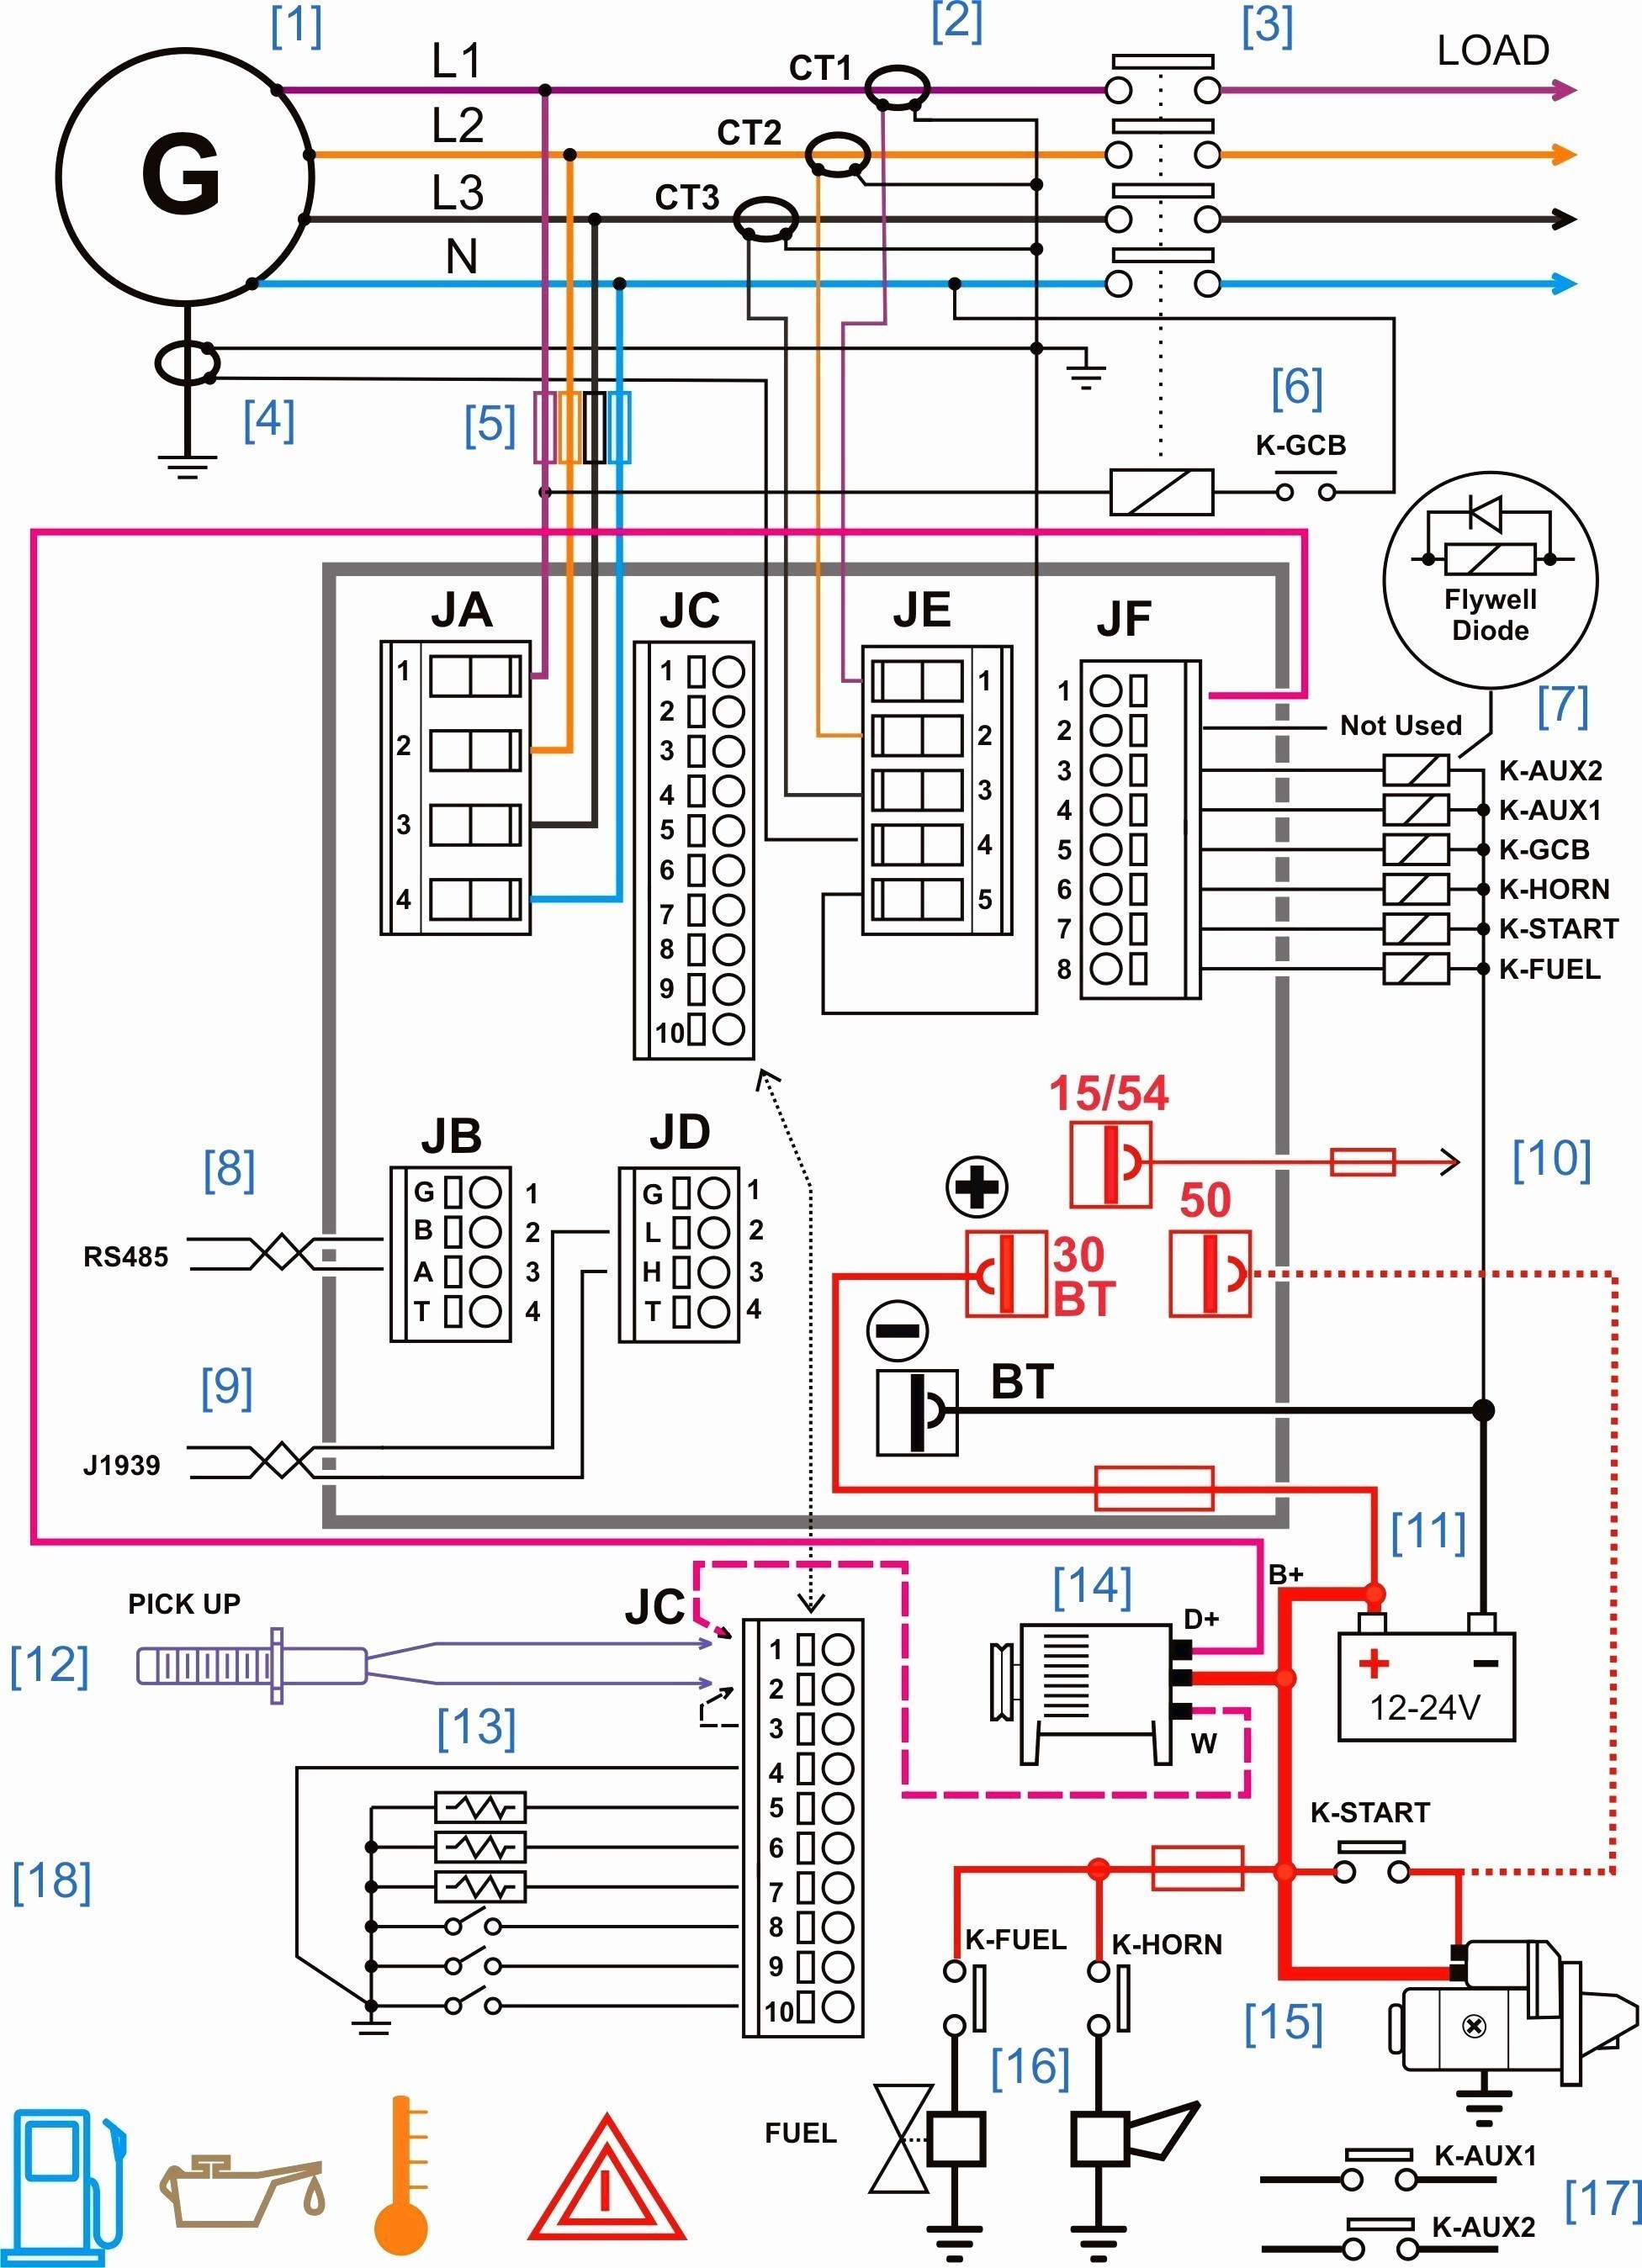 Pioneer Car Stereo Wiring Diagram Free Save Audi A4 Cd Player Wiring Diagram Of Pioneer Car Stereo Wiring Diagram Free